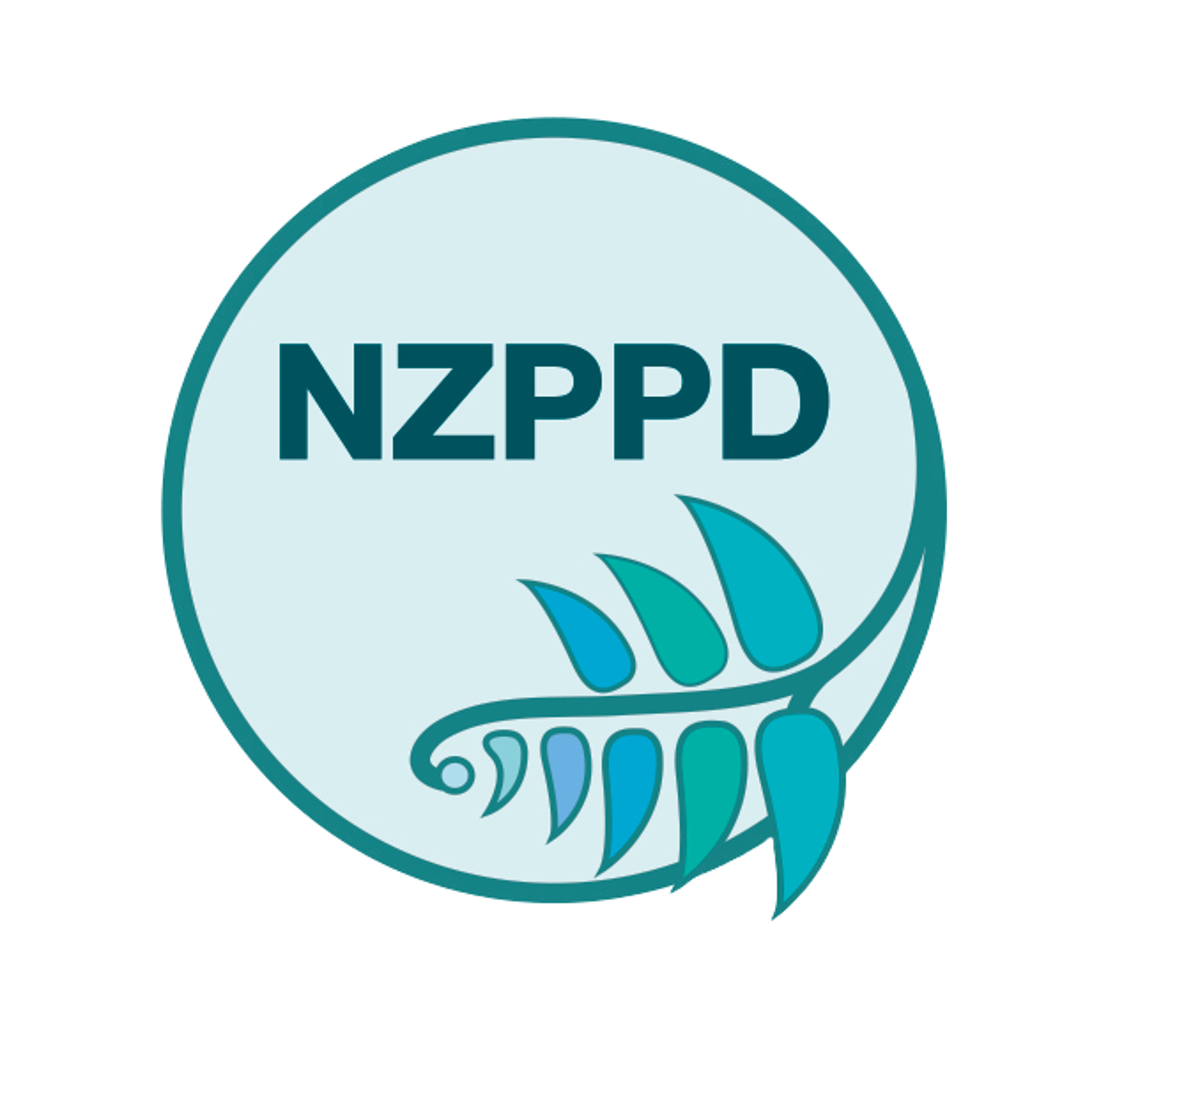 NZPPD logo - more space around logo